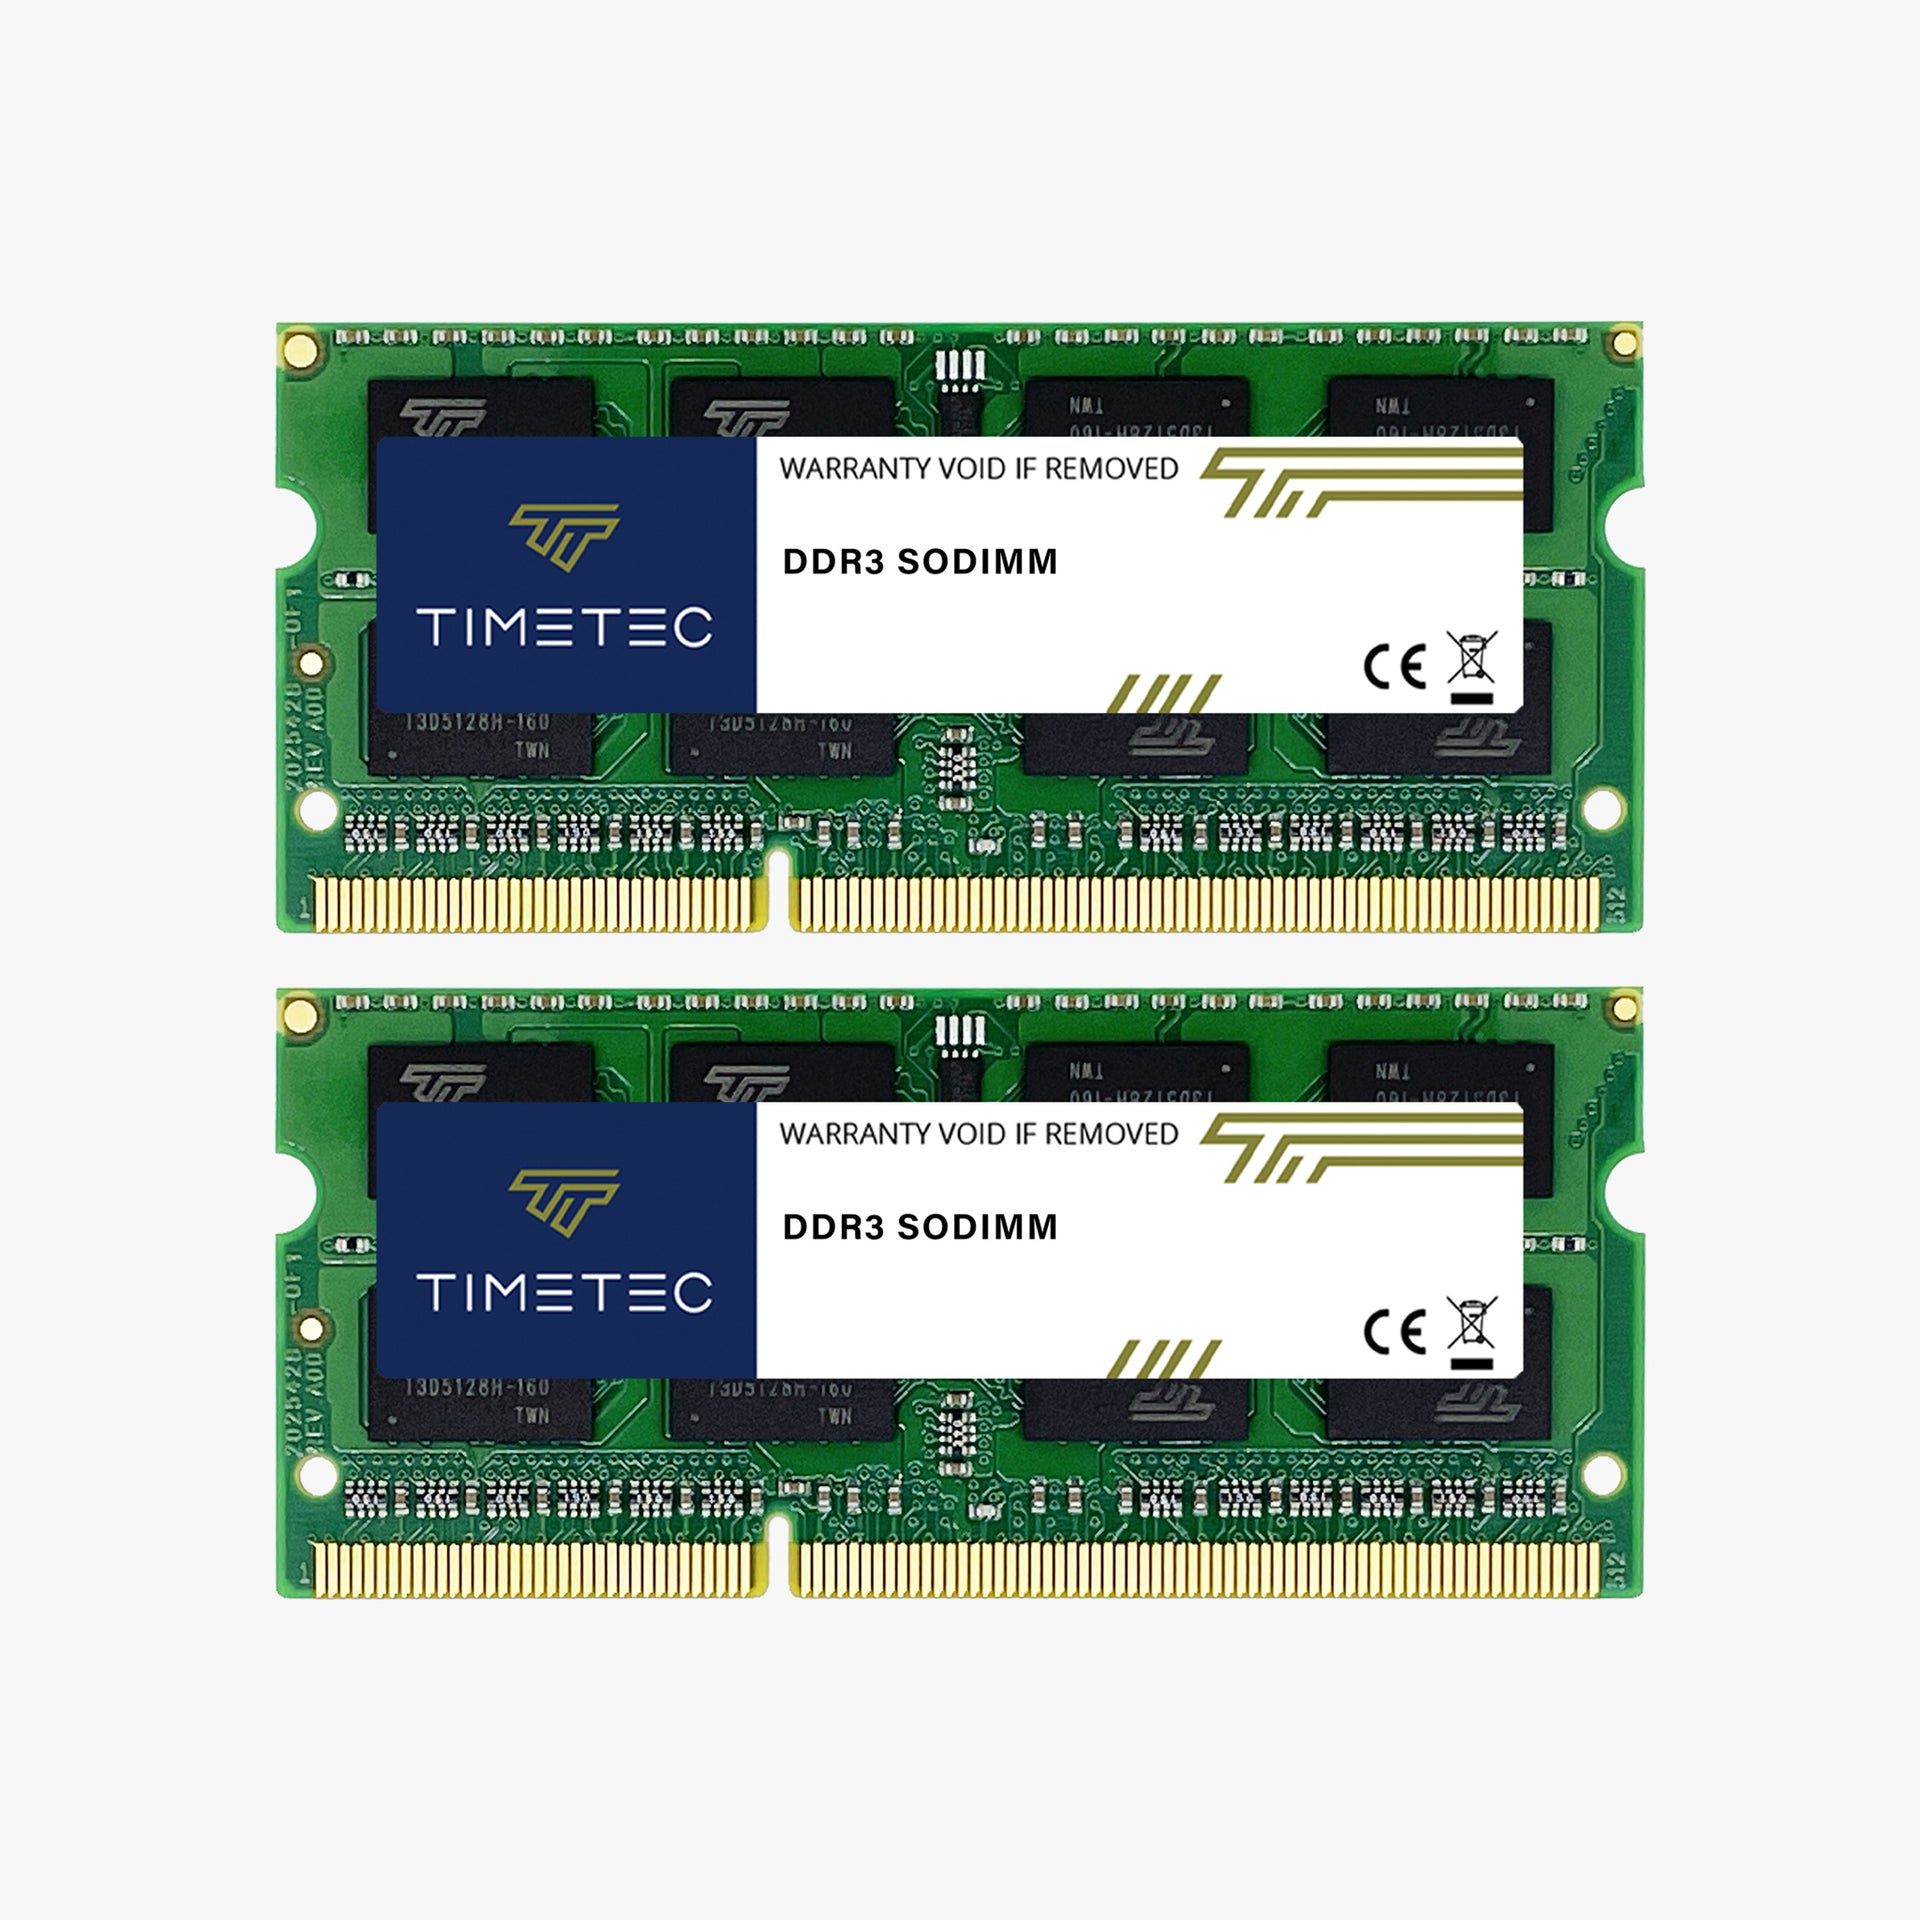 TIMETEC PREMIUM DDR3 SODIMM Laptop Memory